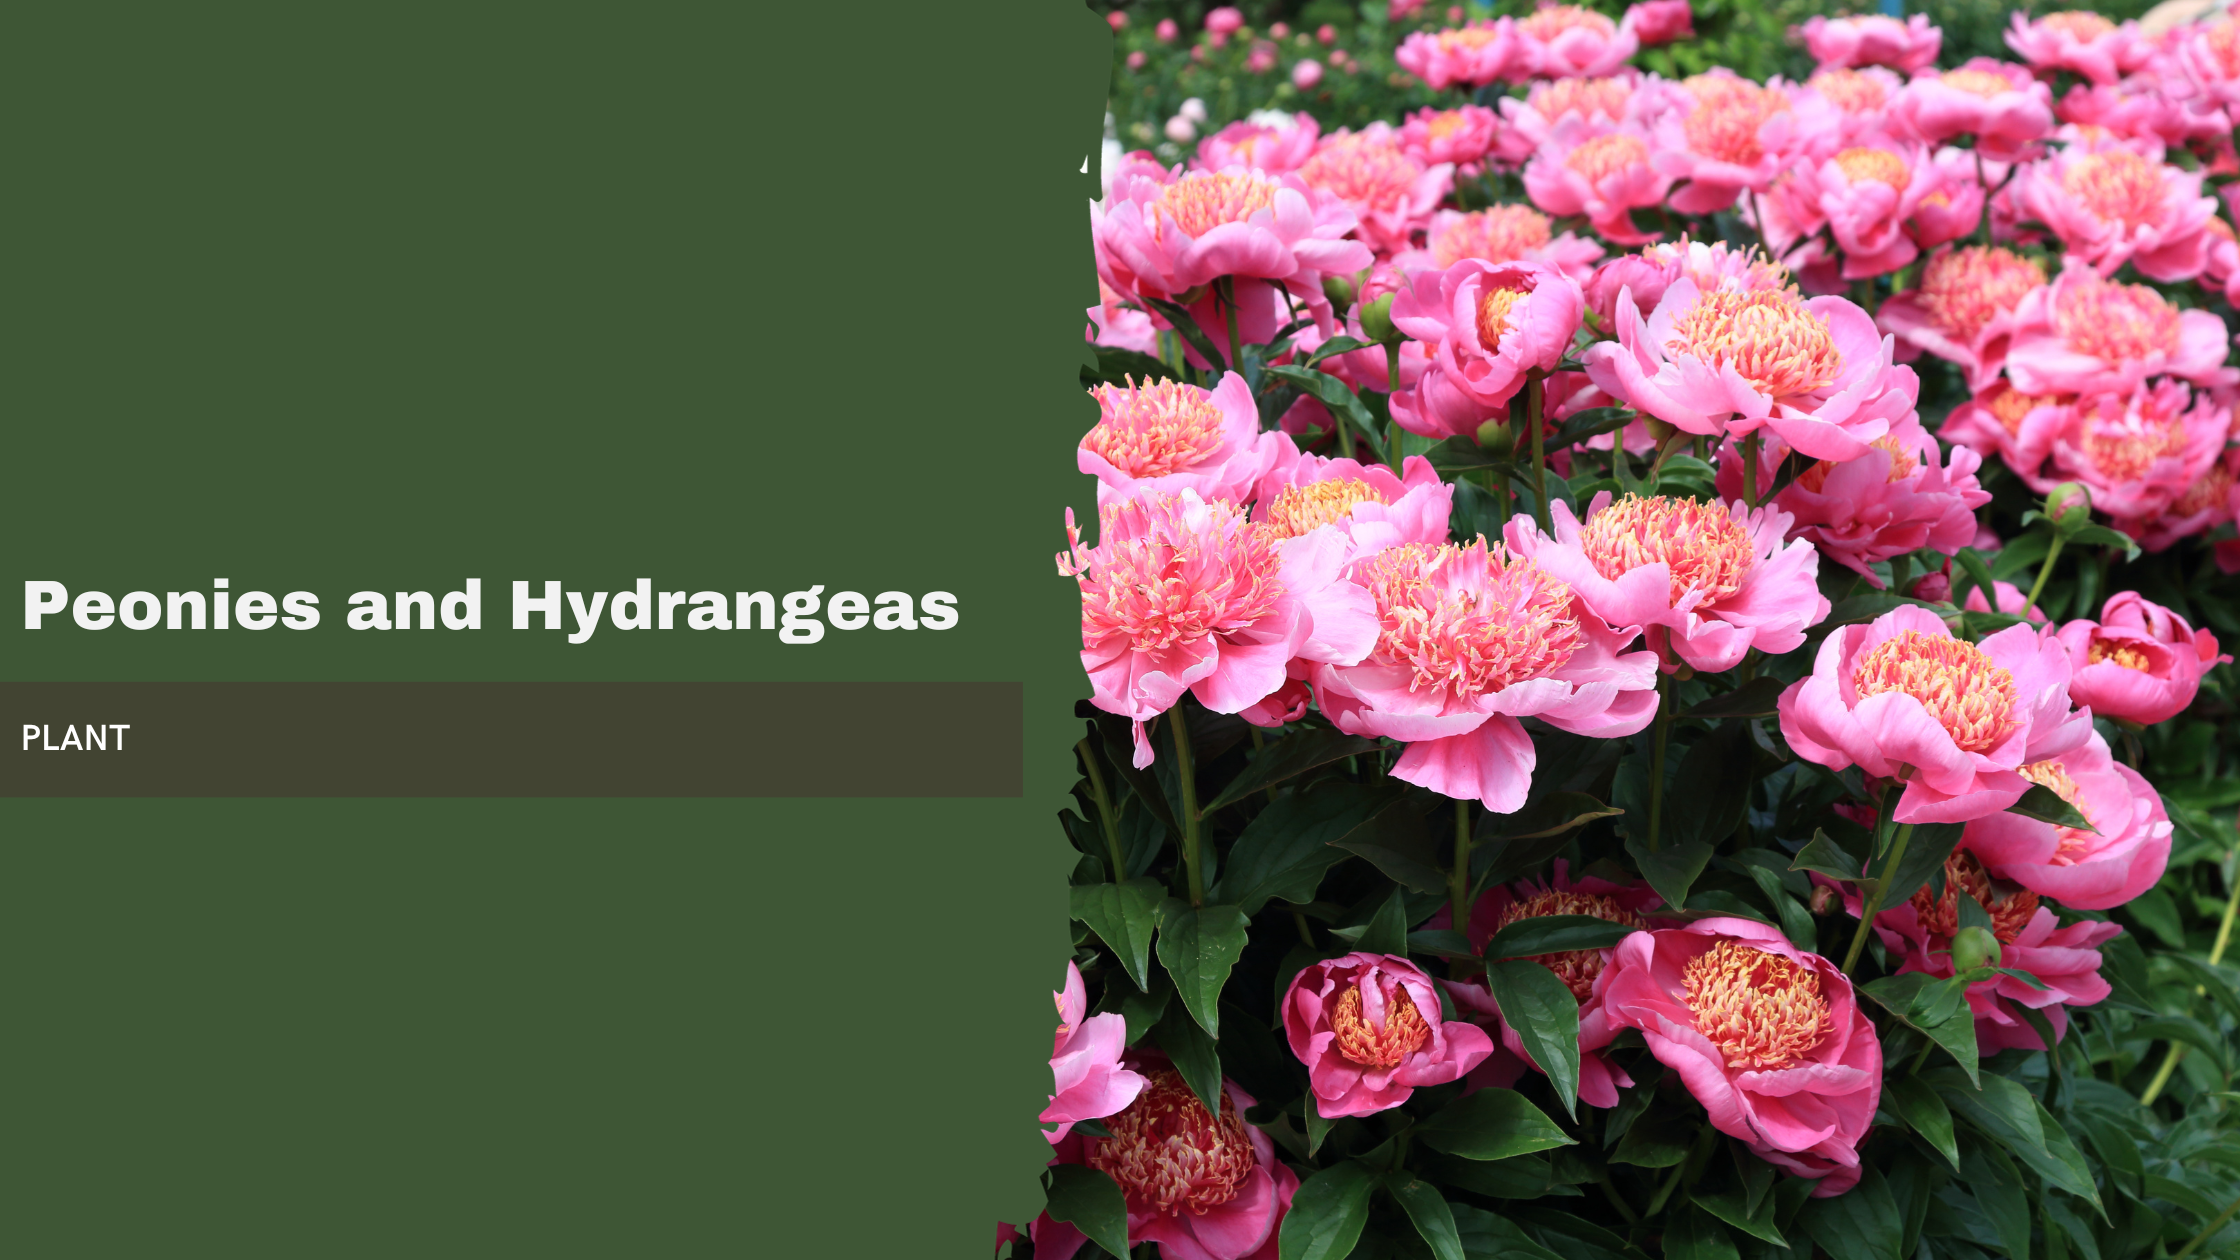 Peonies and Hydrangeas